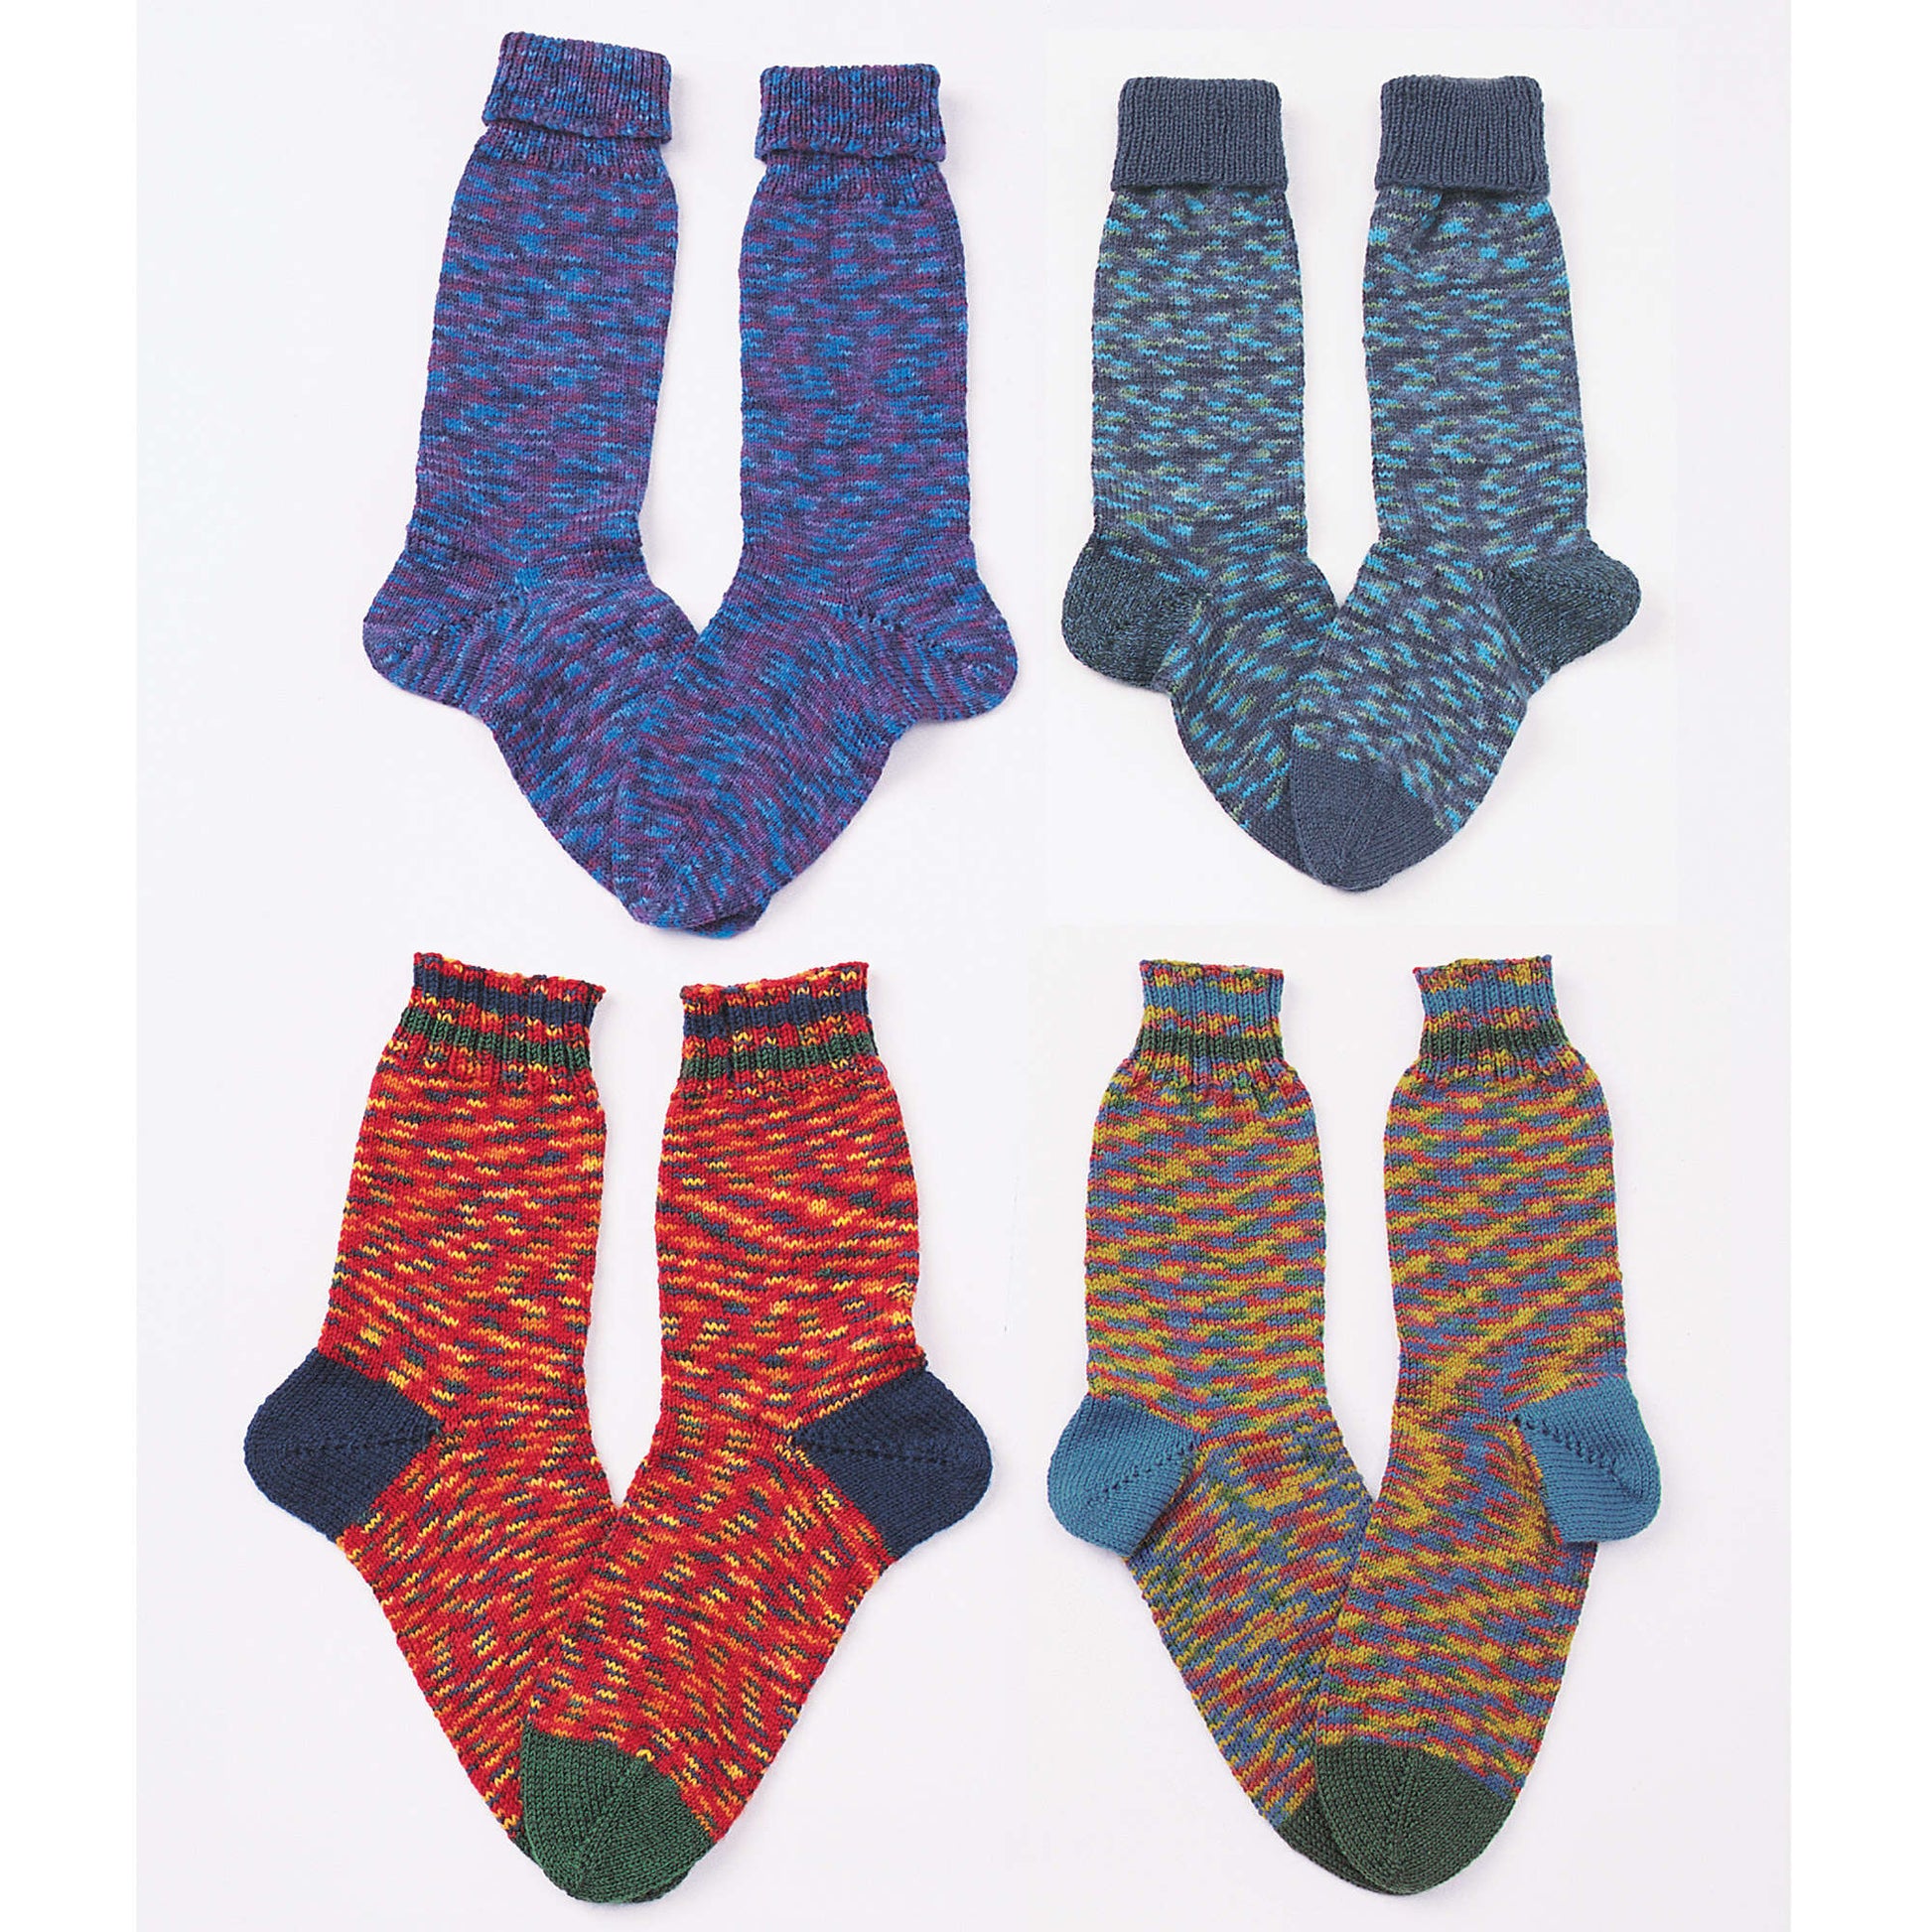 Free Patons Darted Heel Basics Knit Pattern